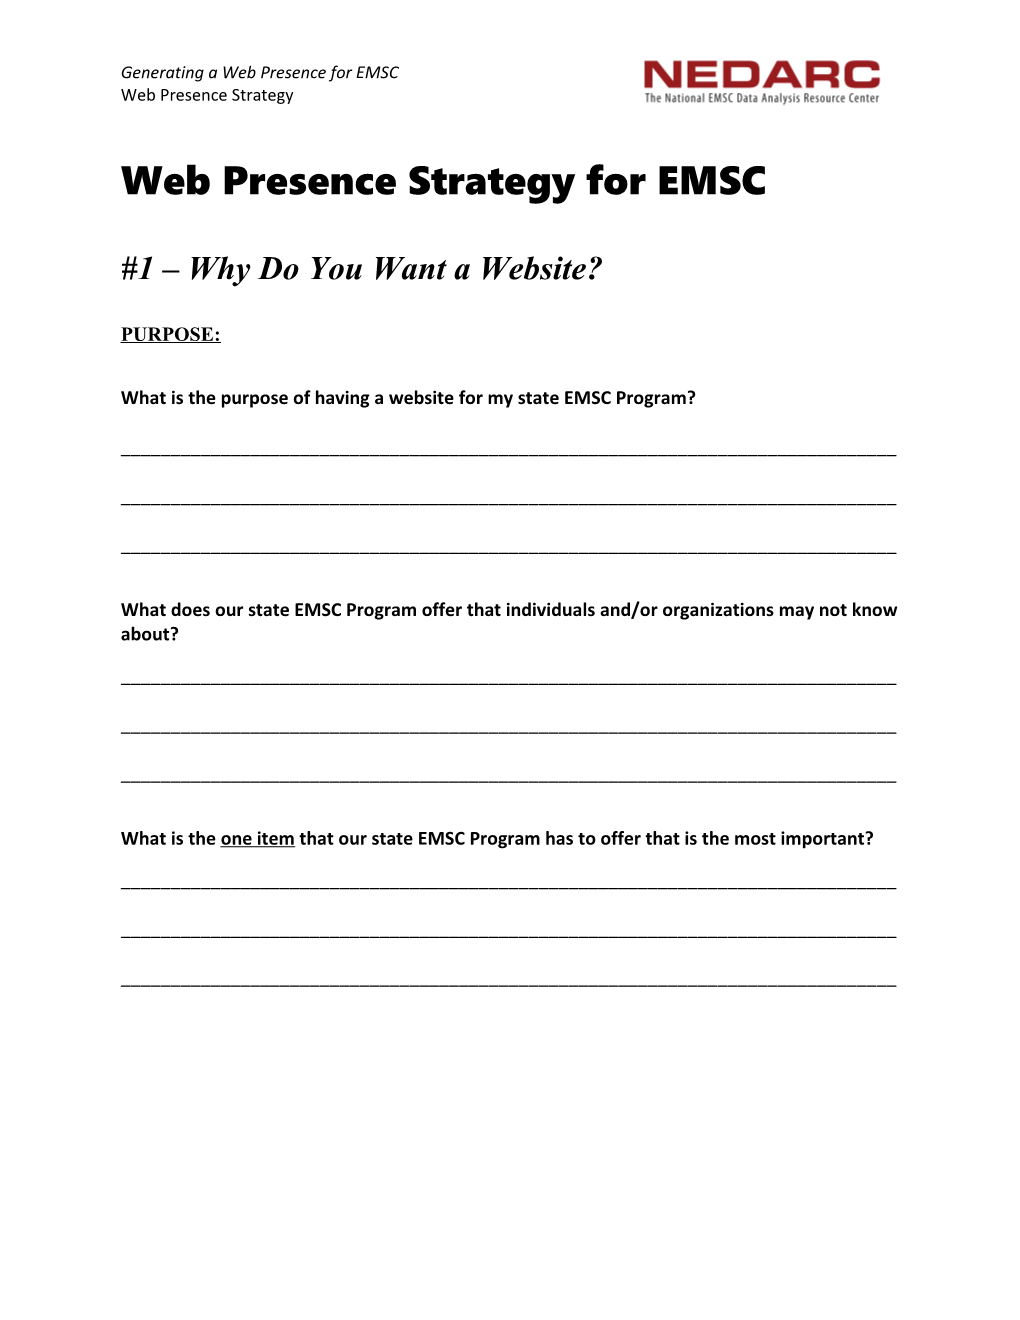 Web Presence Strategy for EMSC